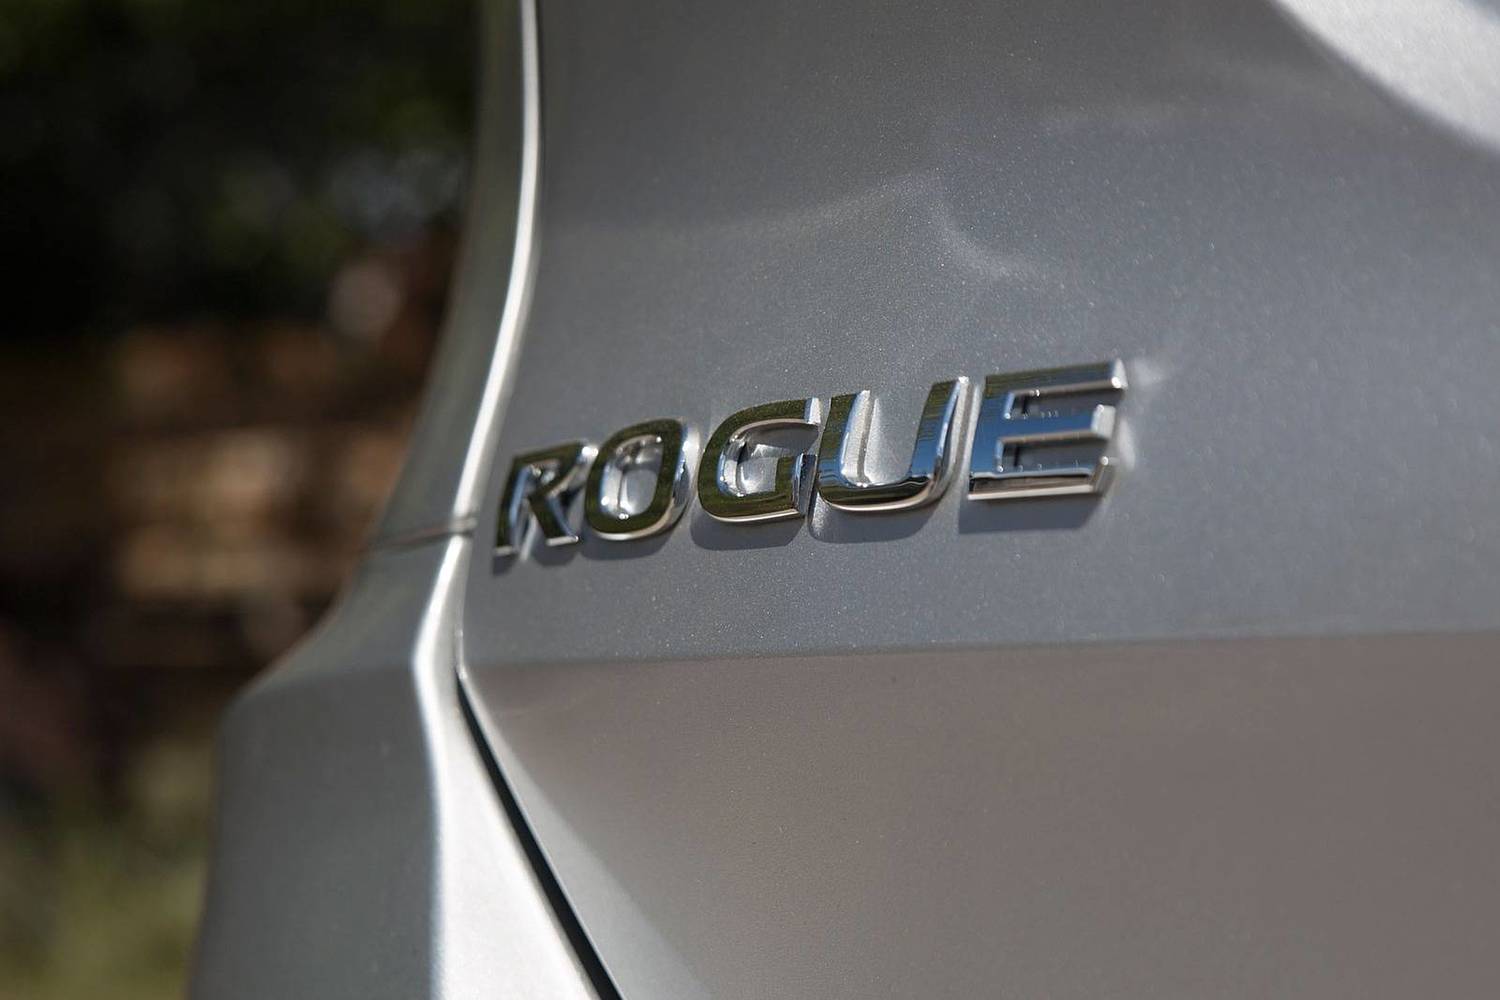 Nissan Rogue SV 4dr SUV Rear Badge (2017 model year shown)